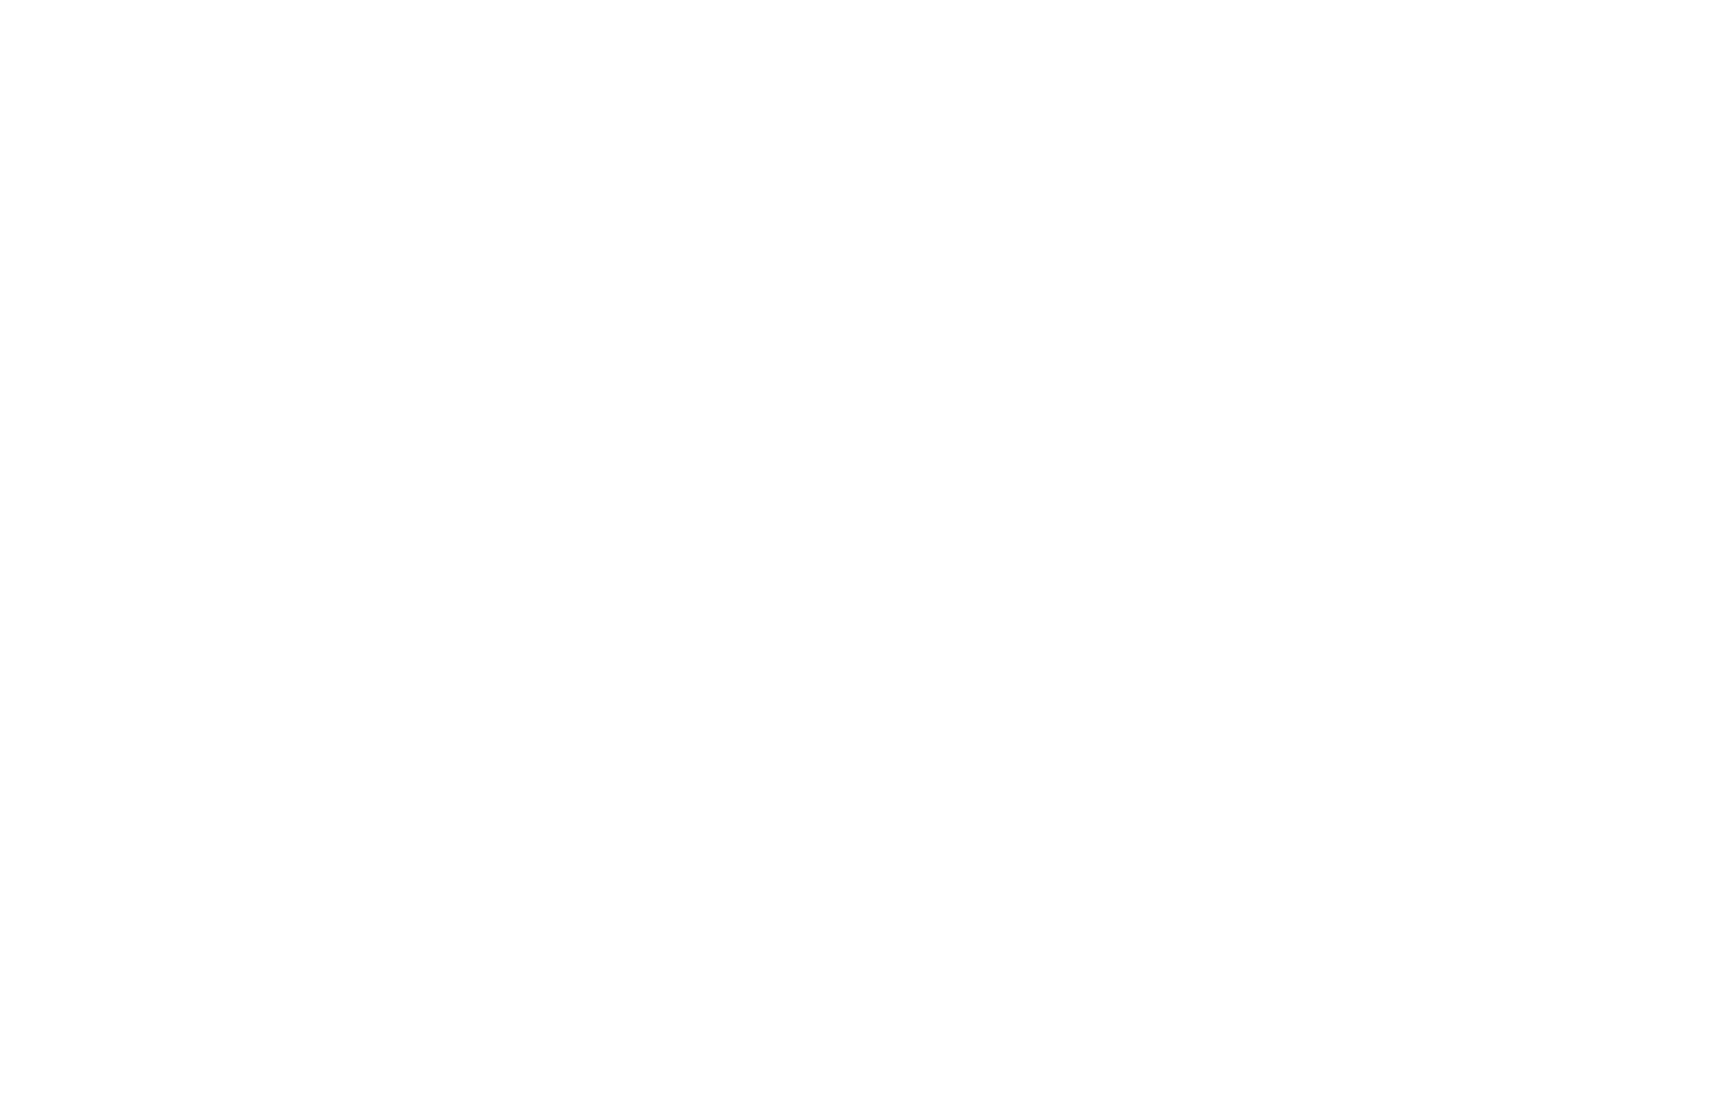 Restaurant King of India